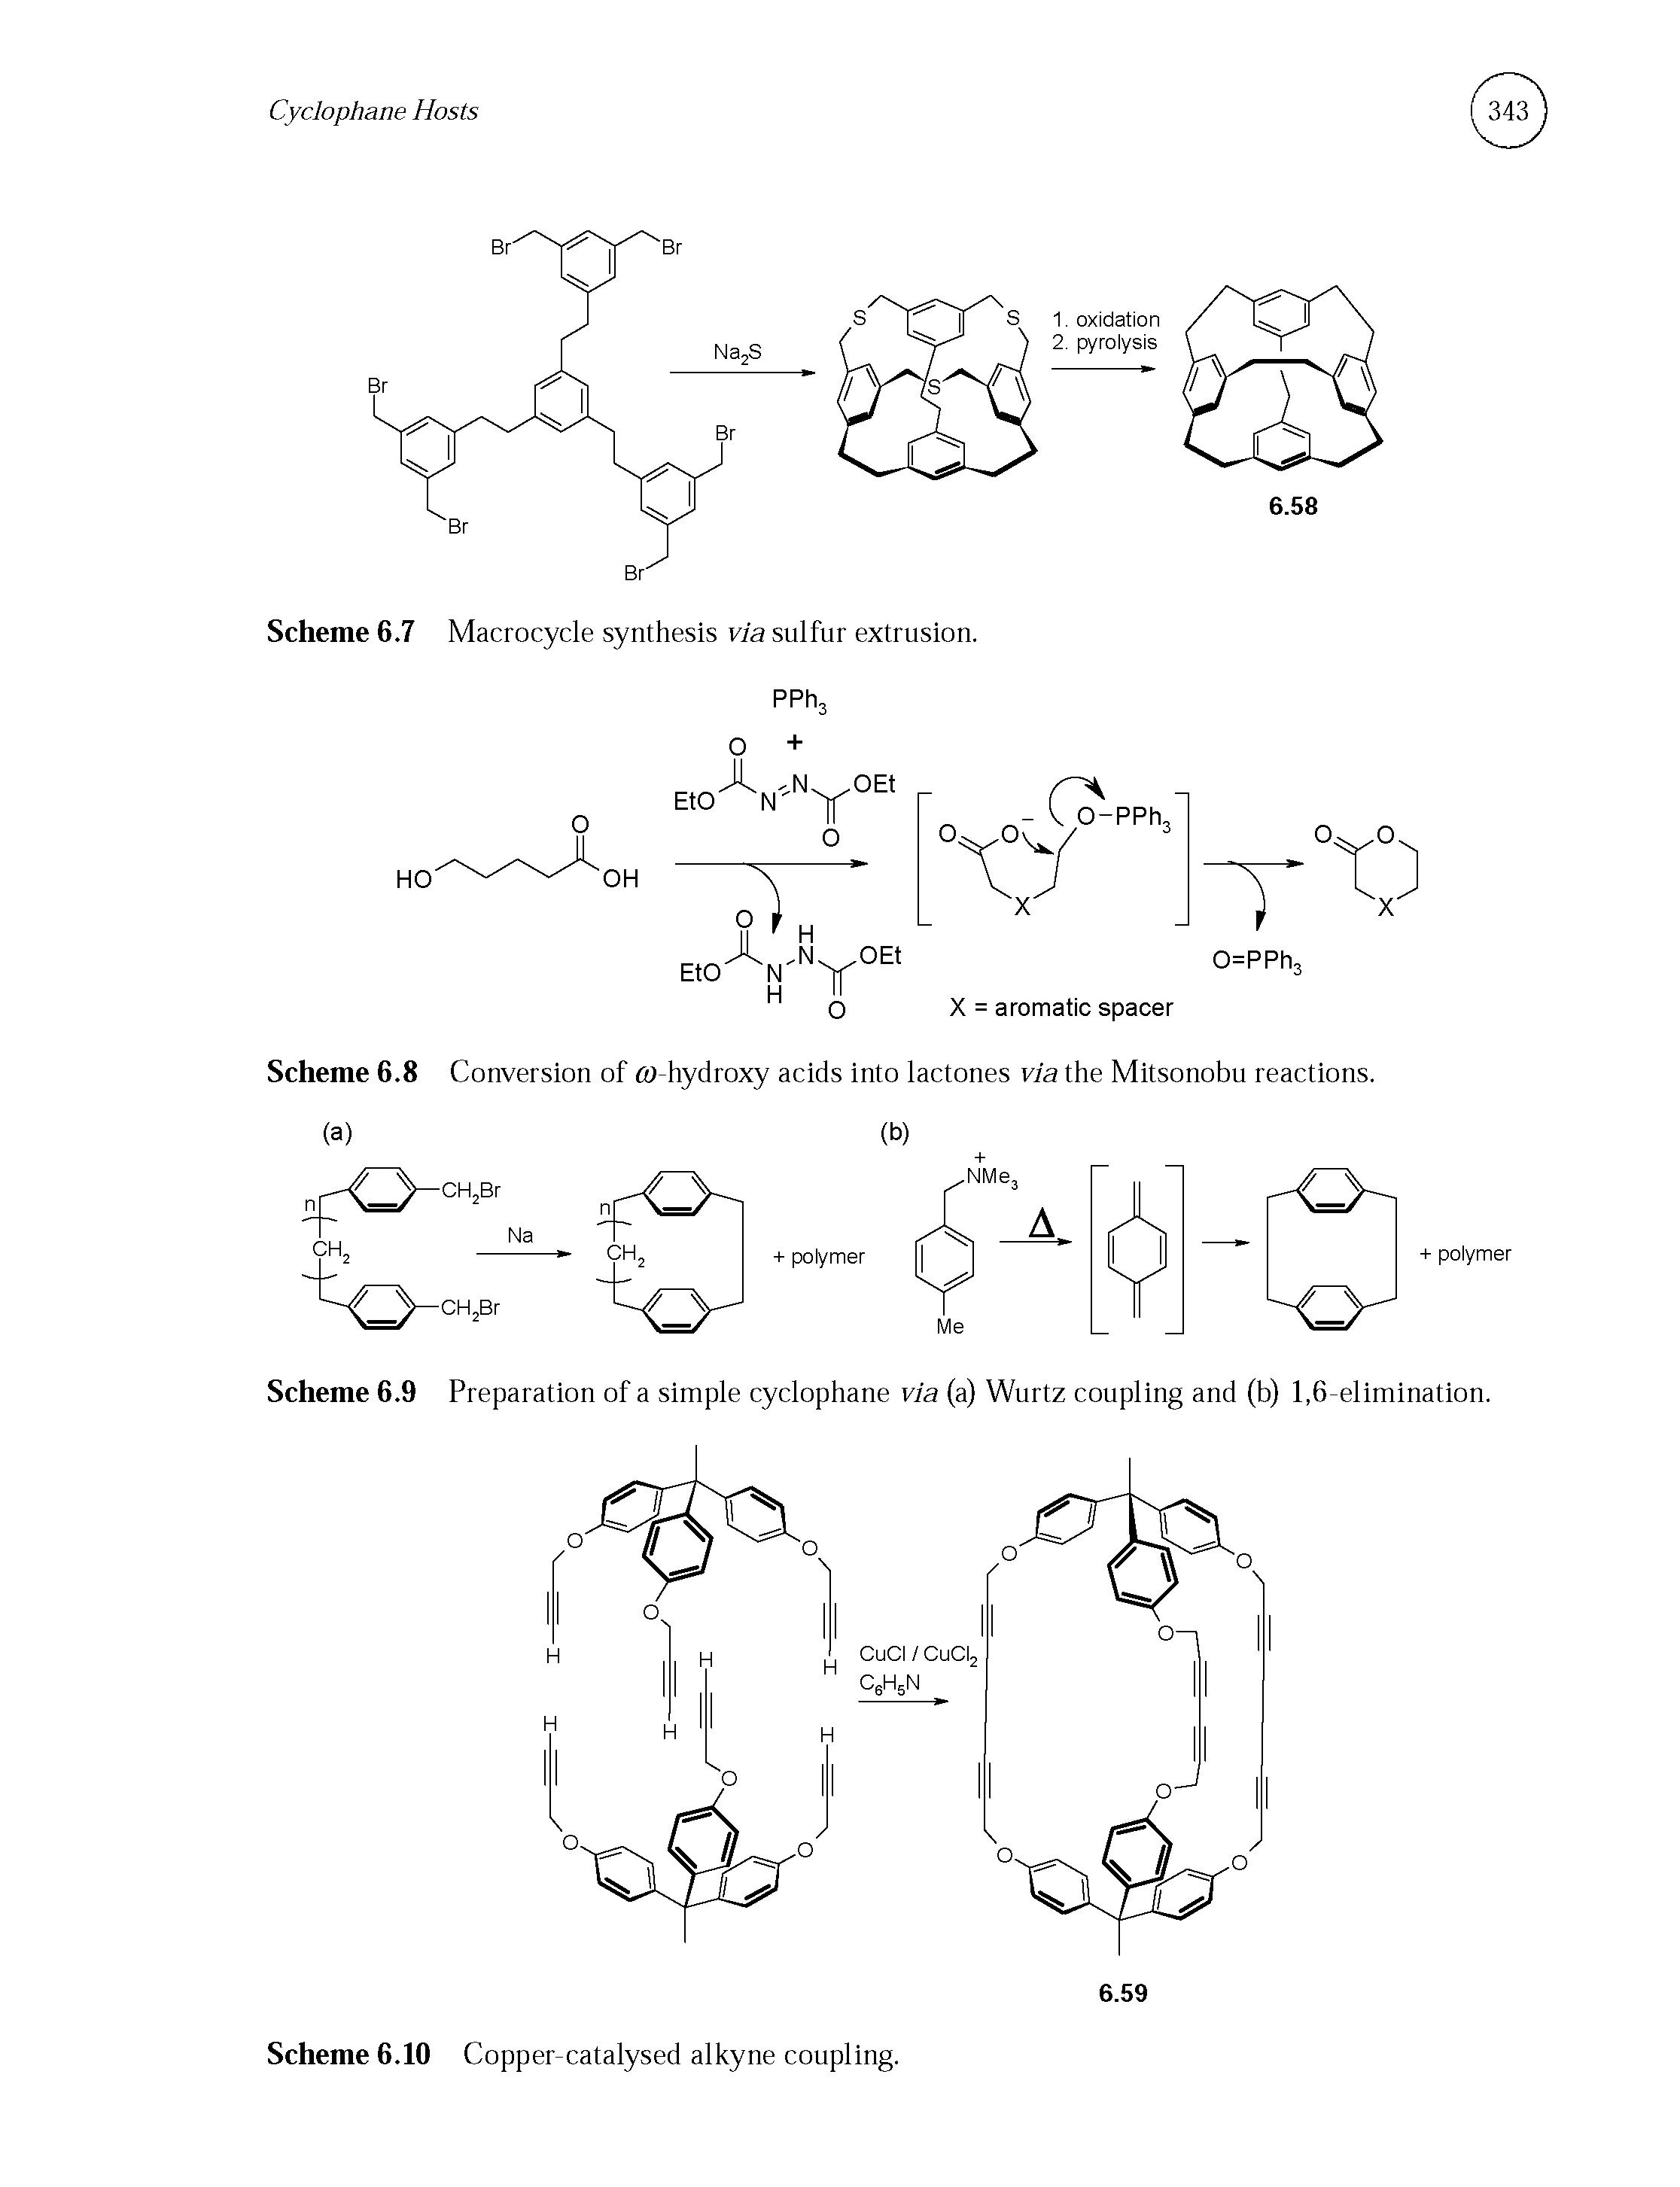 Scheme 6.8 Conversion of hydroxy acids into lactones via the Mitsonobu reactions.